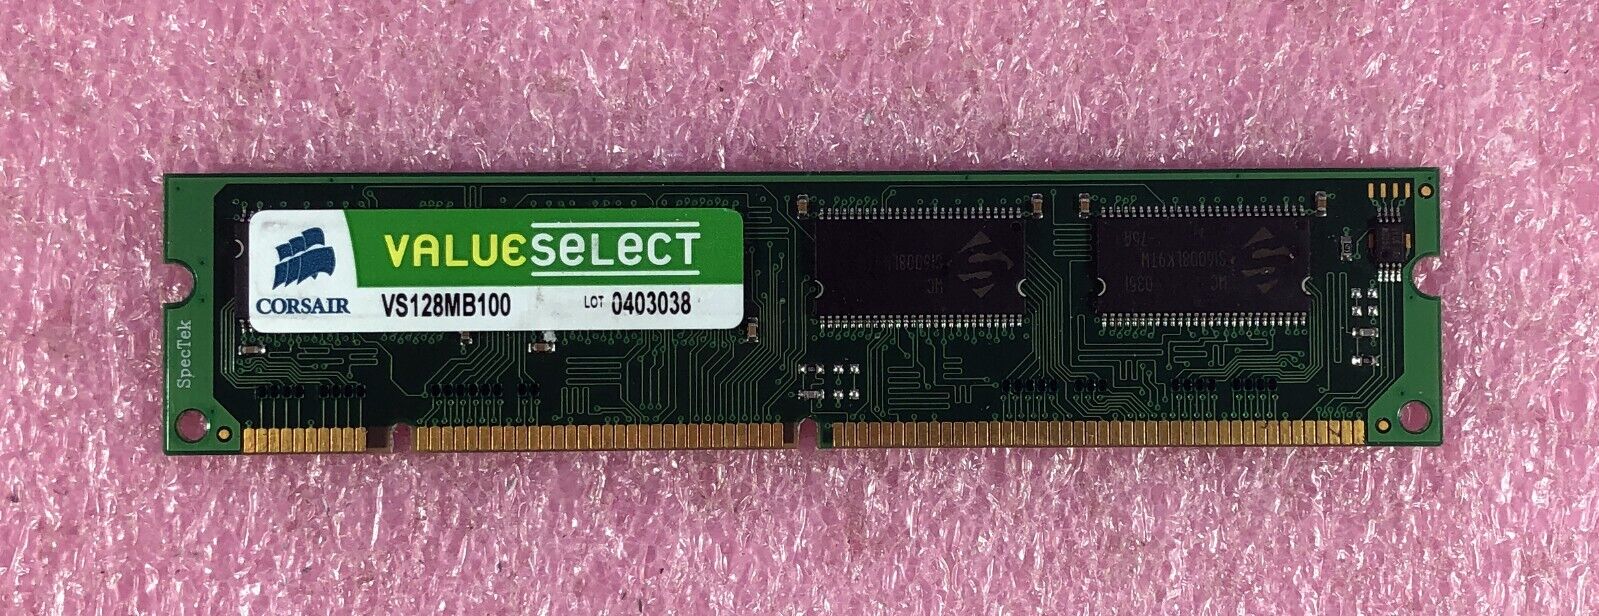 1 X 128MB CORSAIR PC100 NON-ECC MEMORY RAM - P/N: VS128MB100